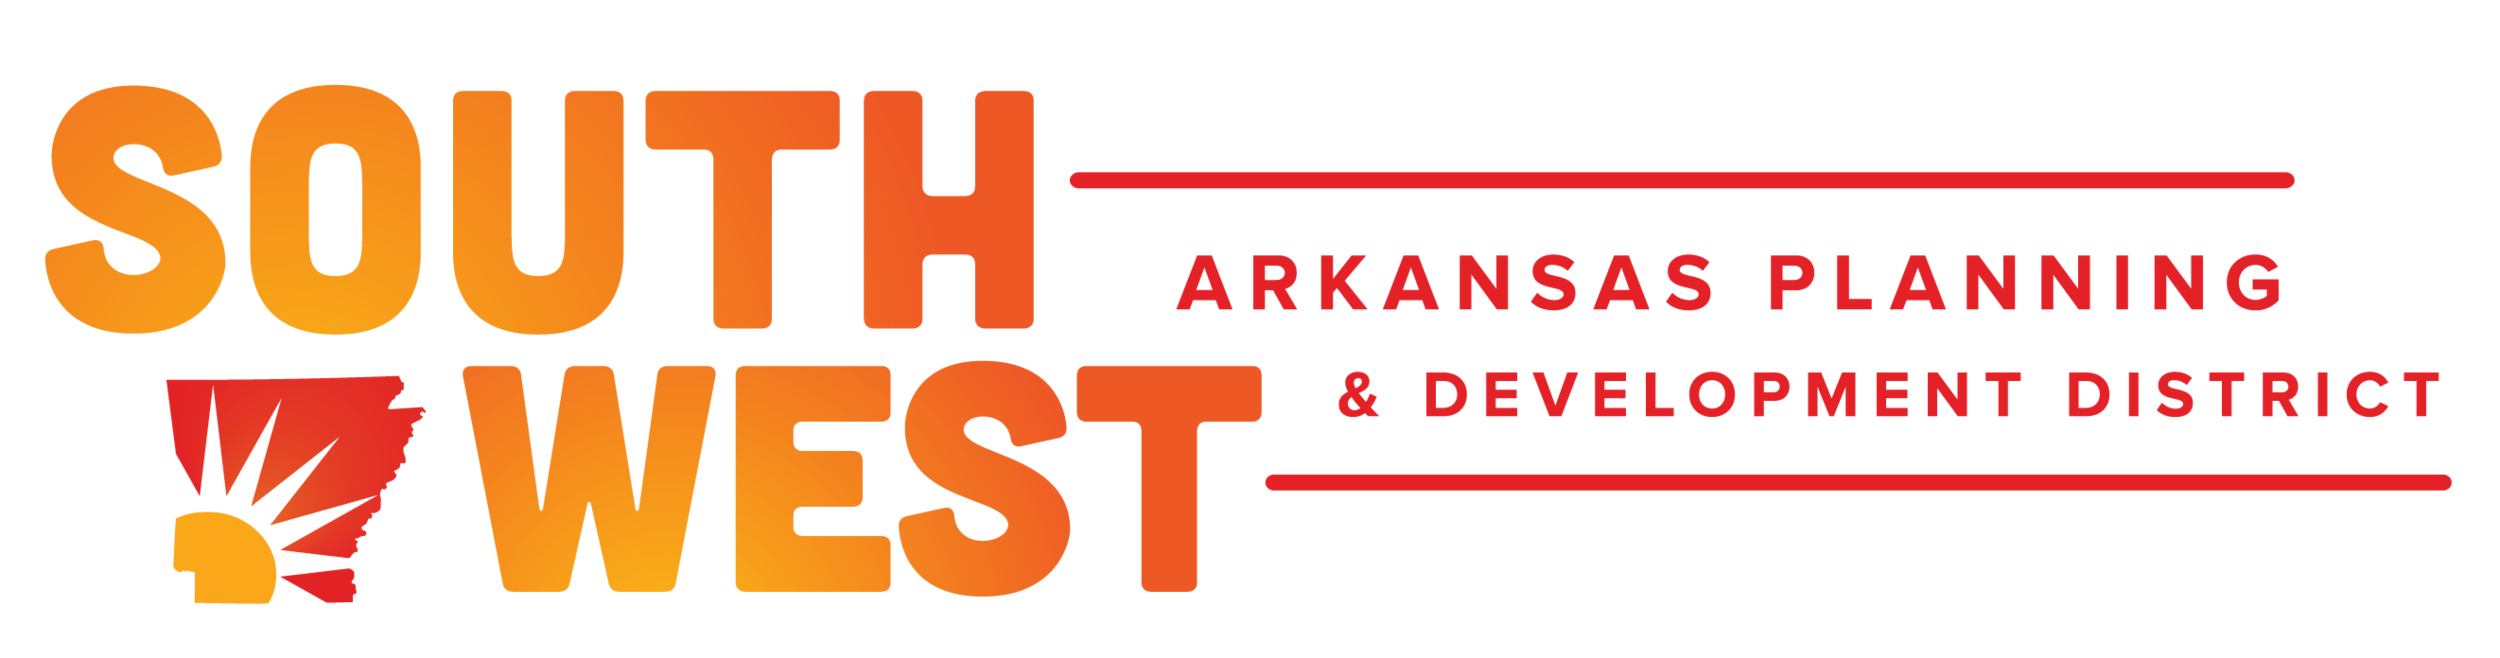 Southwest Arkansas Planning and Development District